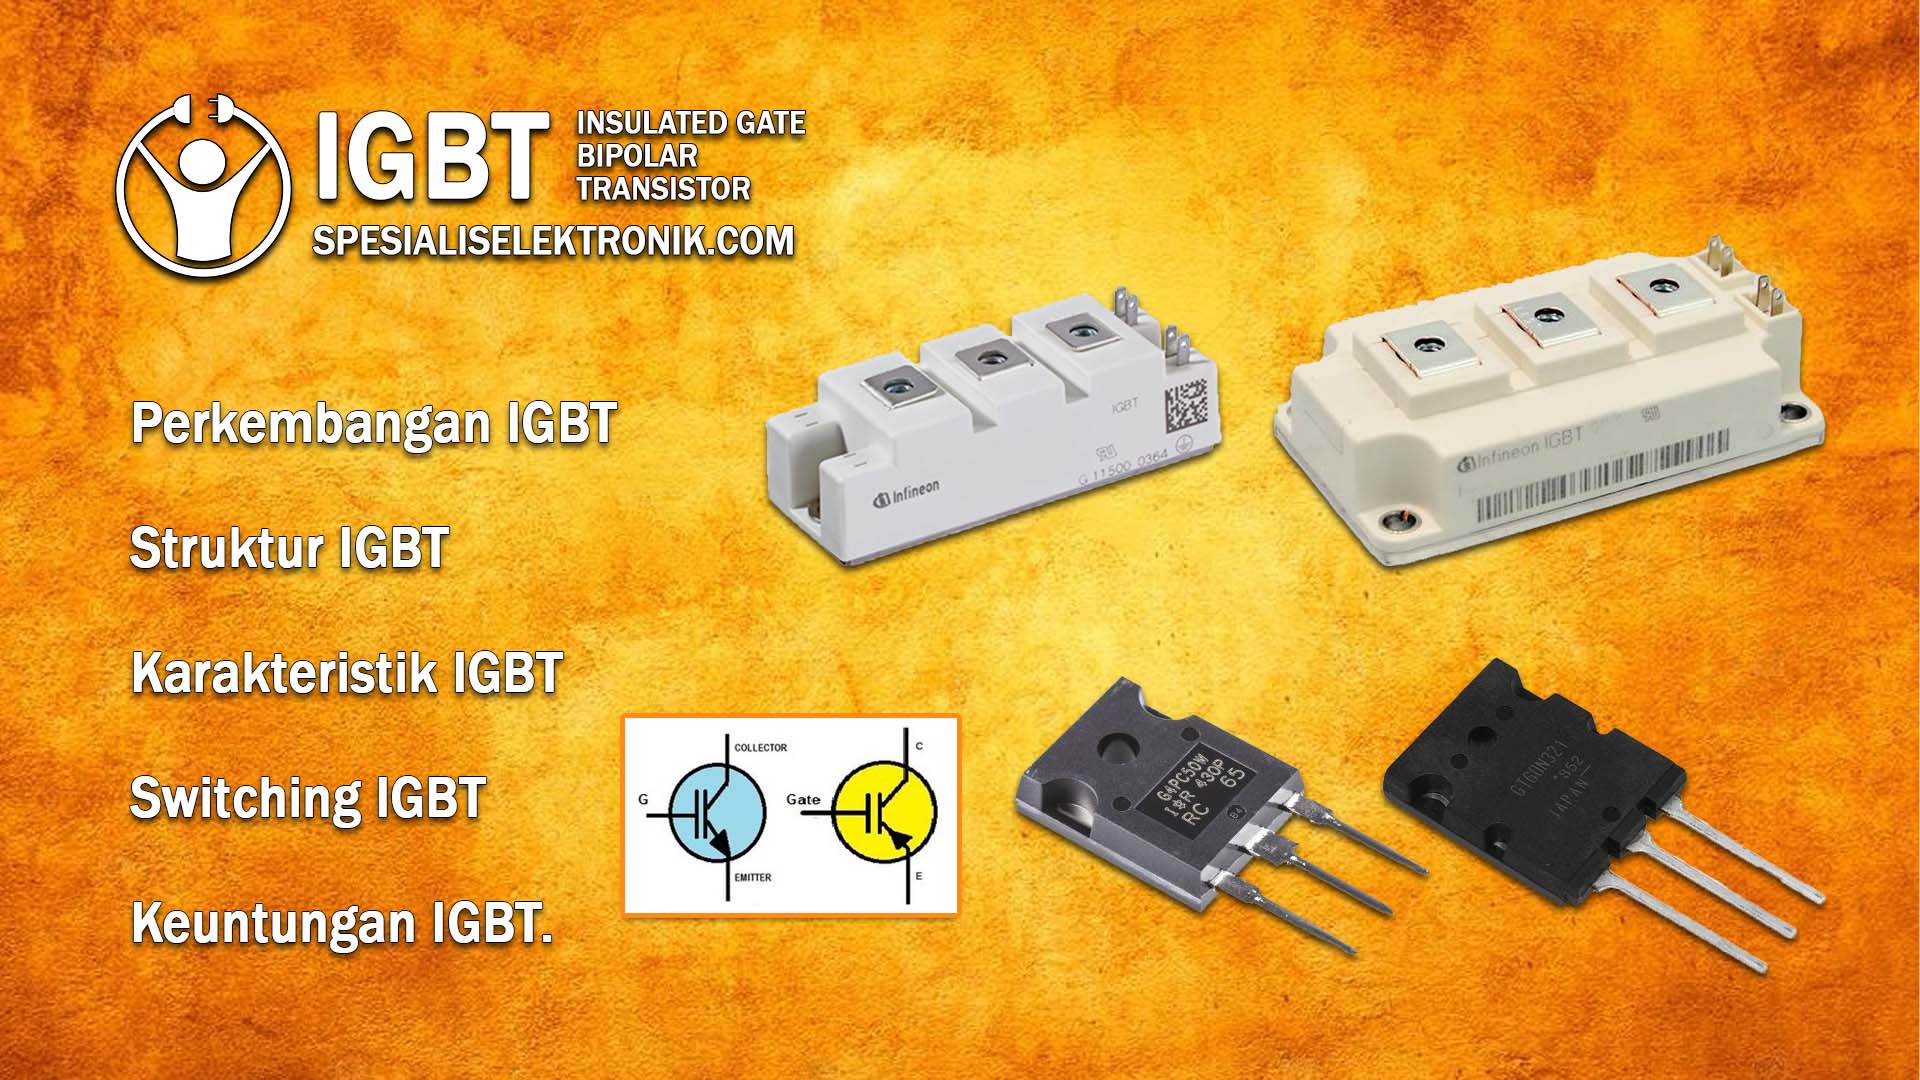 Pengertian Insulated Gate Bipolar Transistor (IGBT)